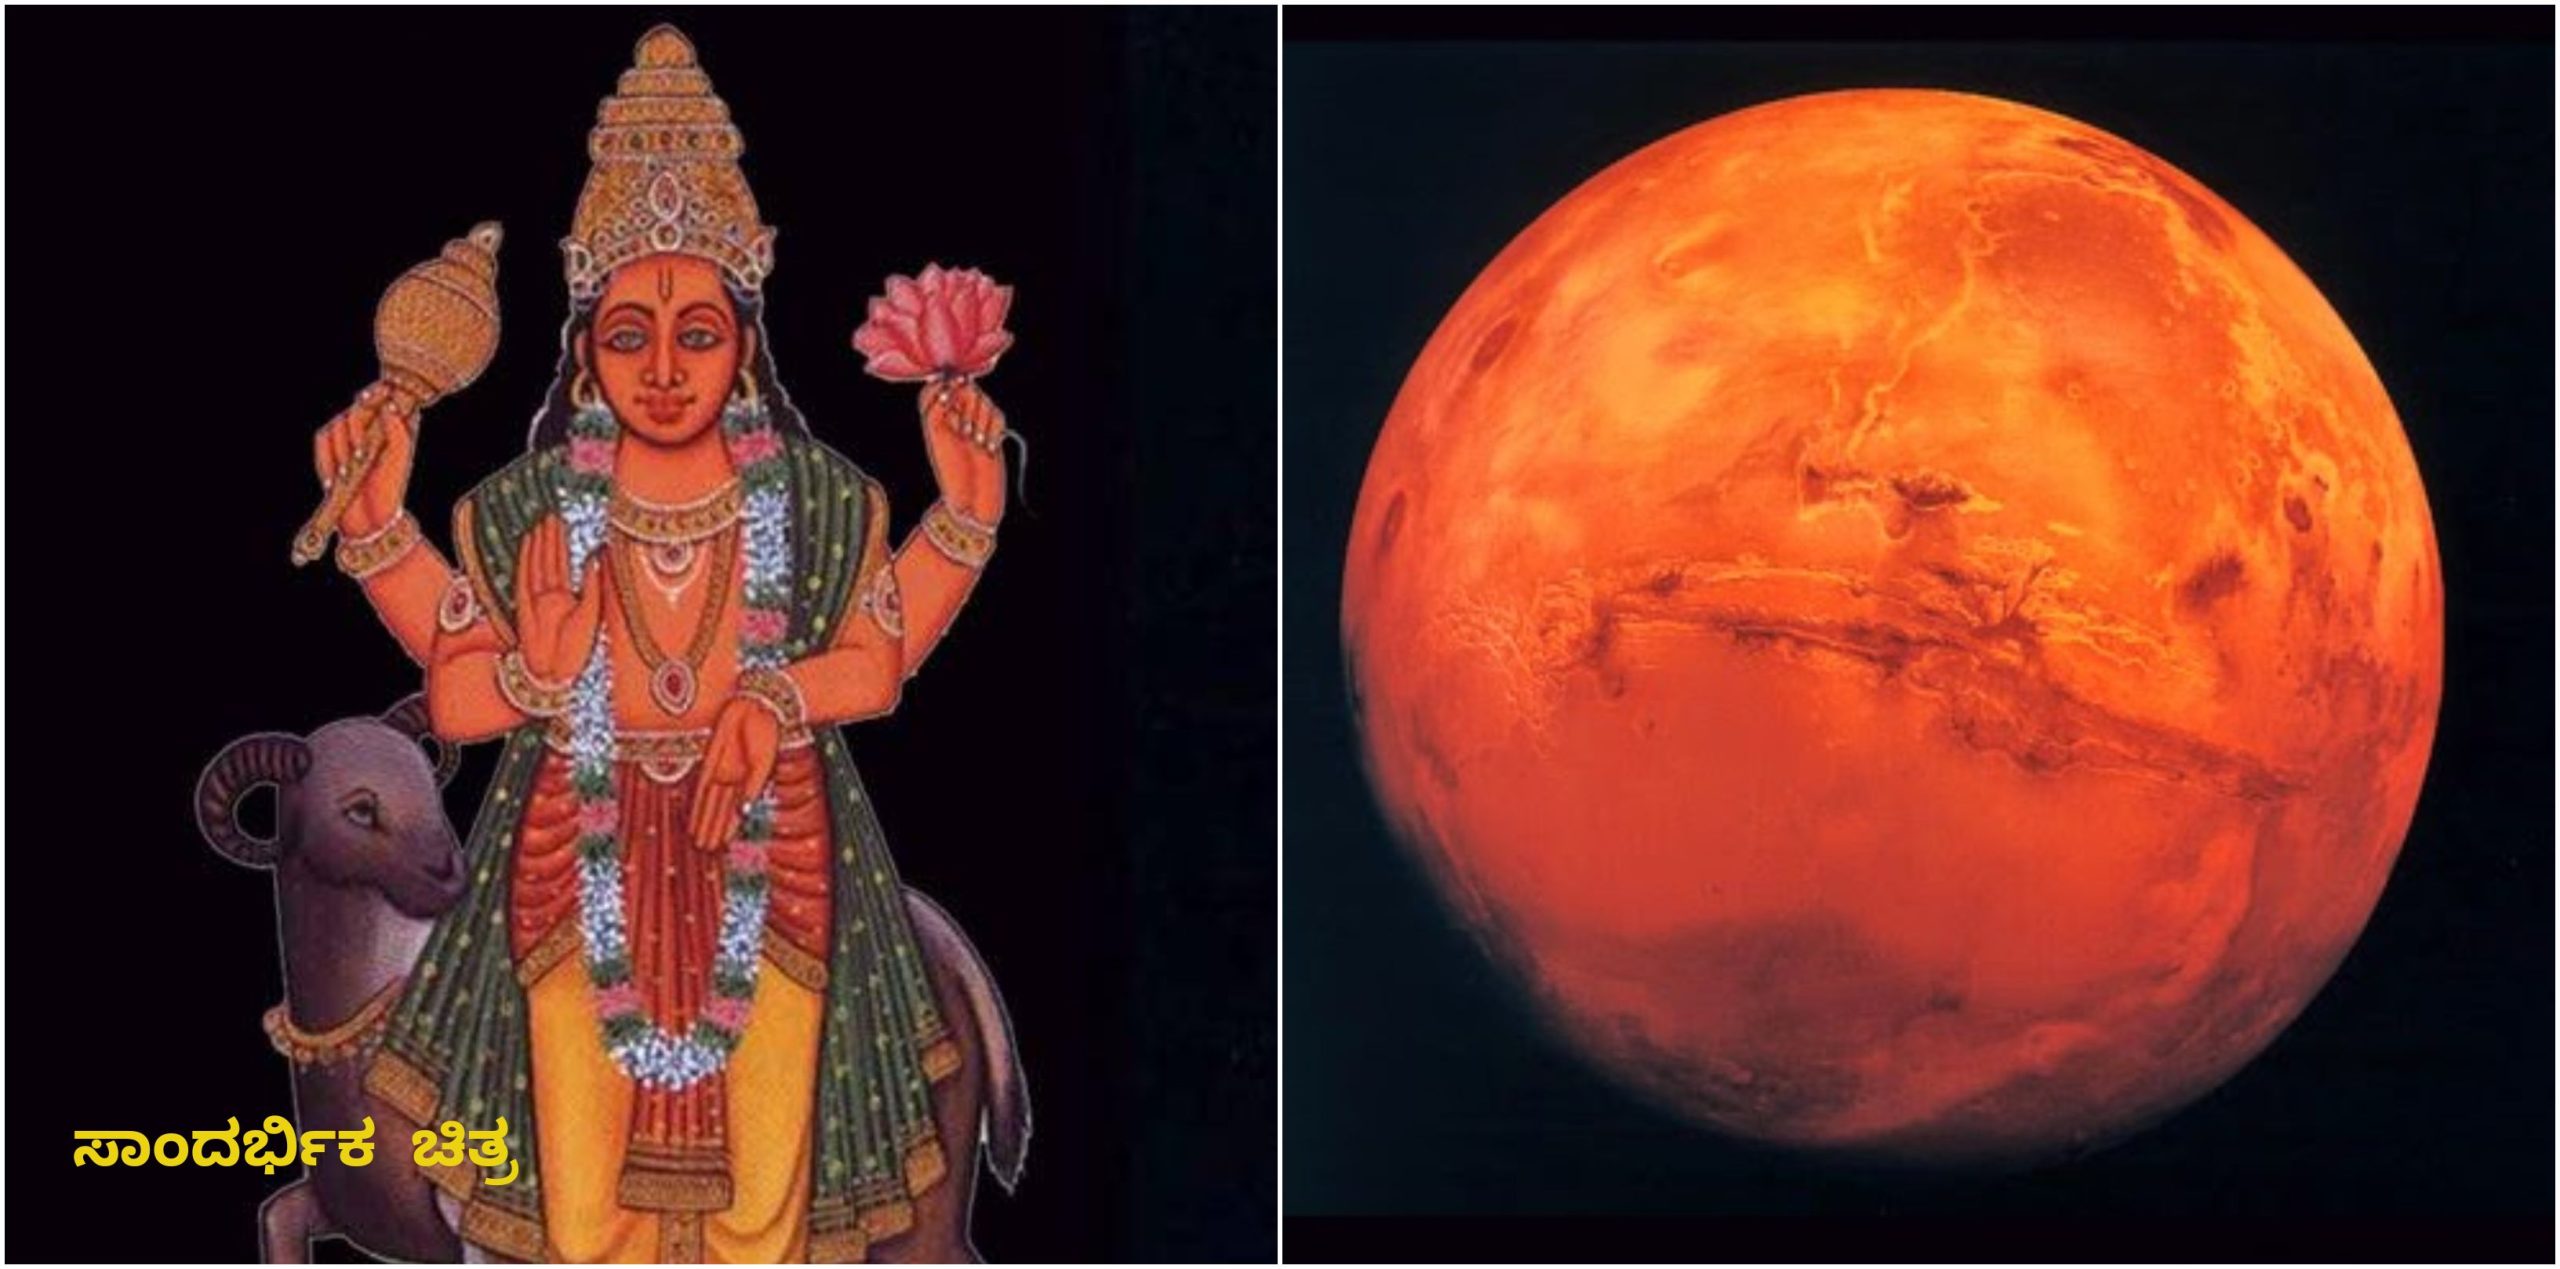 Mangala 1 scaled | Astrology: ನೋಡಿ ಸ್ವಾಮಿ, ಇಷ್ಟು ದಿವಸ ನಿಮಗೆ ಕಷ್ಟ ಇಟ್ಟು ನಿಜ- ಆದರೆ ಈ ರಾಶಿಗಳಿಗೆ ಕಷ್ಟ ಹೋಯ್ತು- ಇನ್ನು ಅದೃಷ್ಟ ಮಾತ್ರ